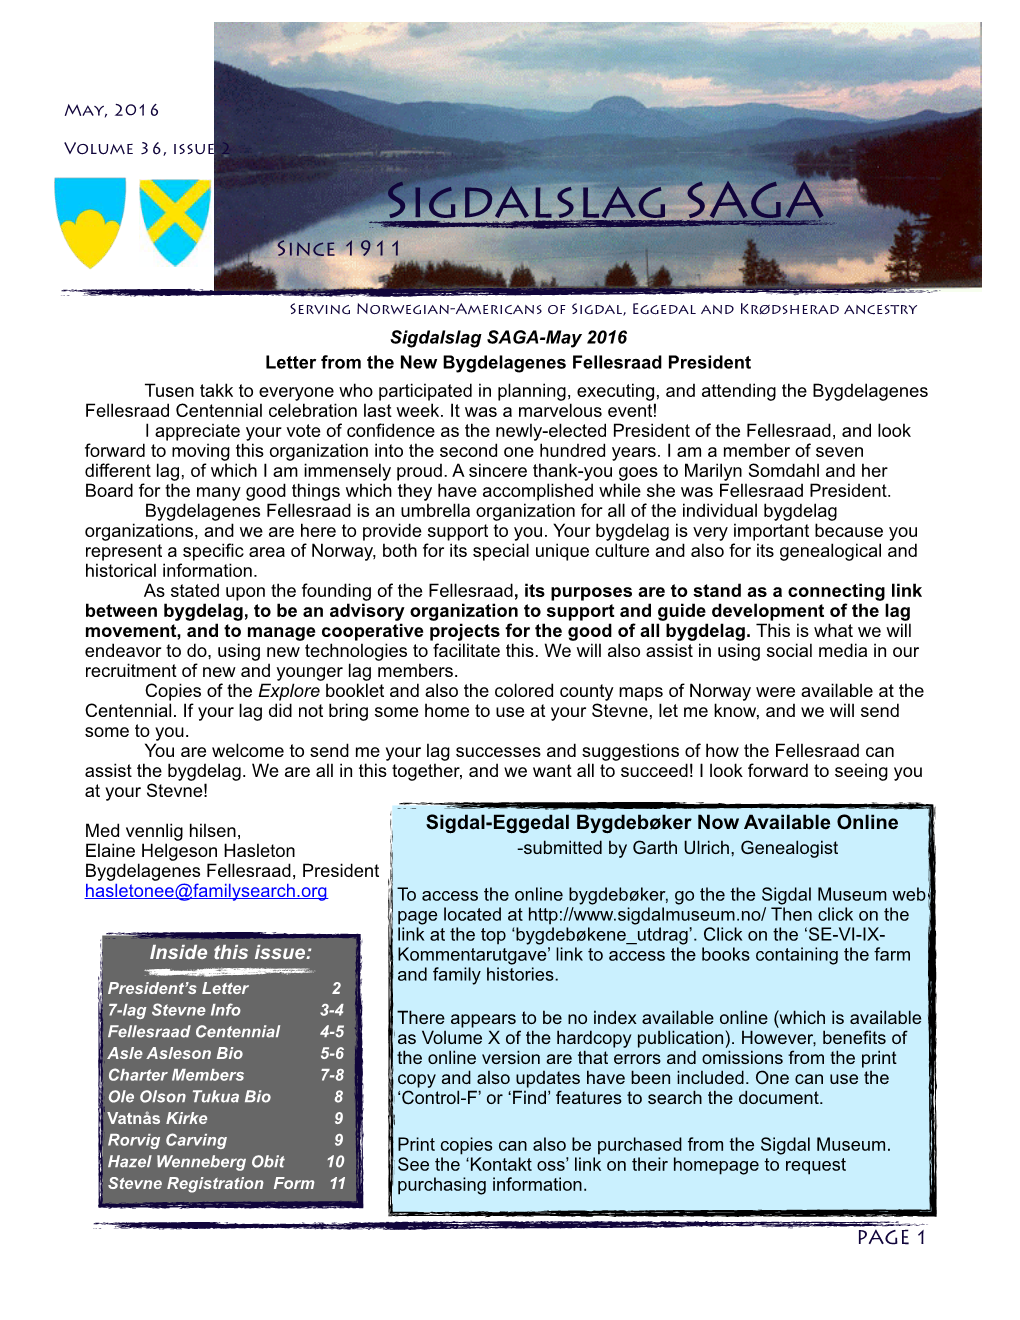 Sigdalslag Saga Volume 36, Issue 2